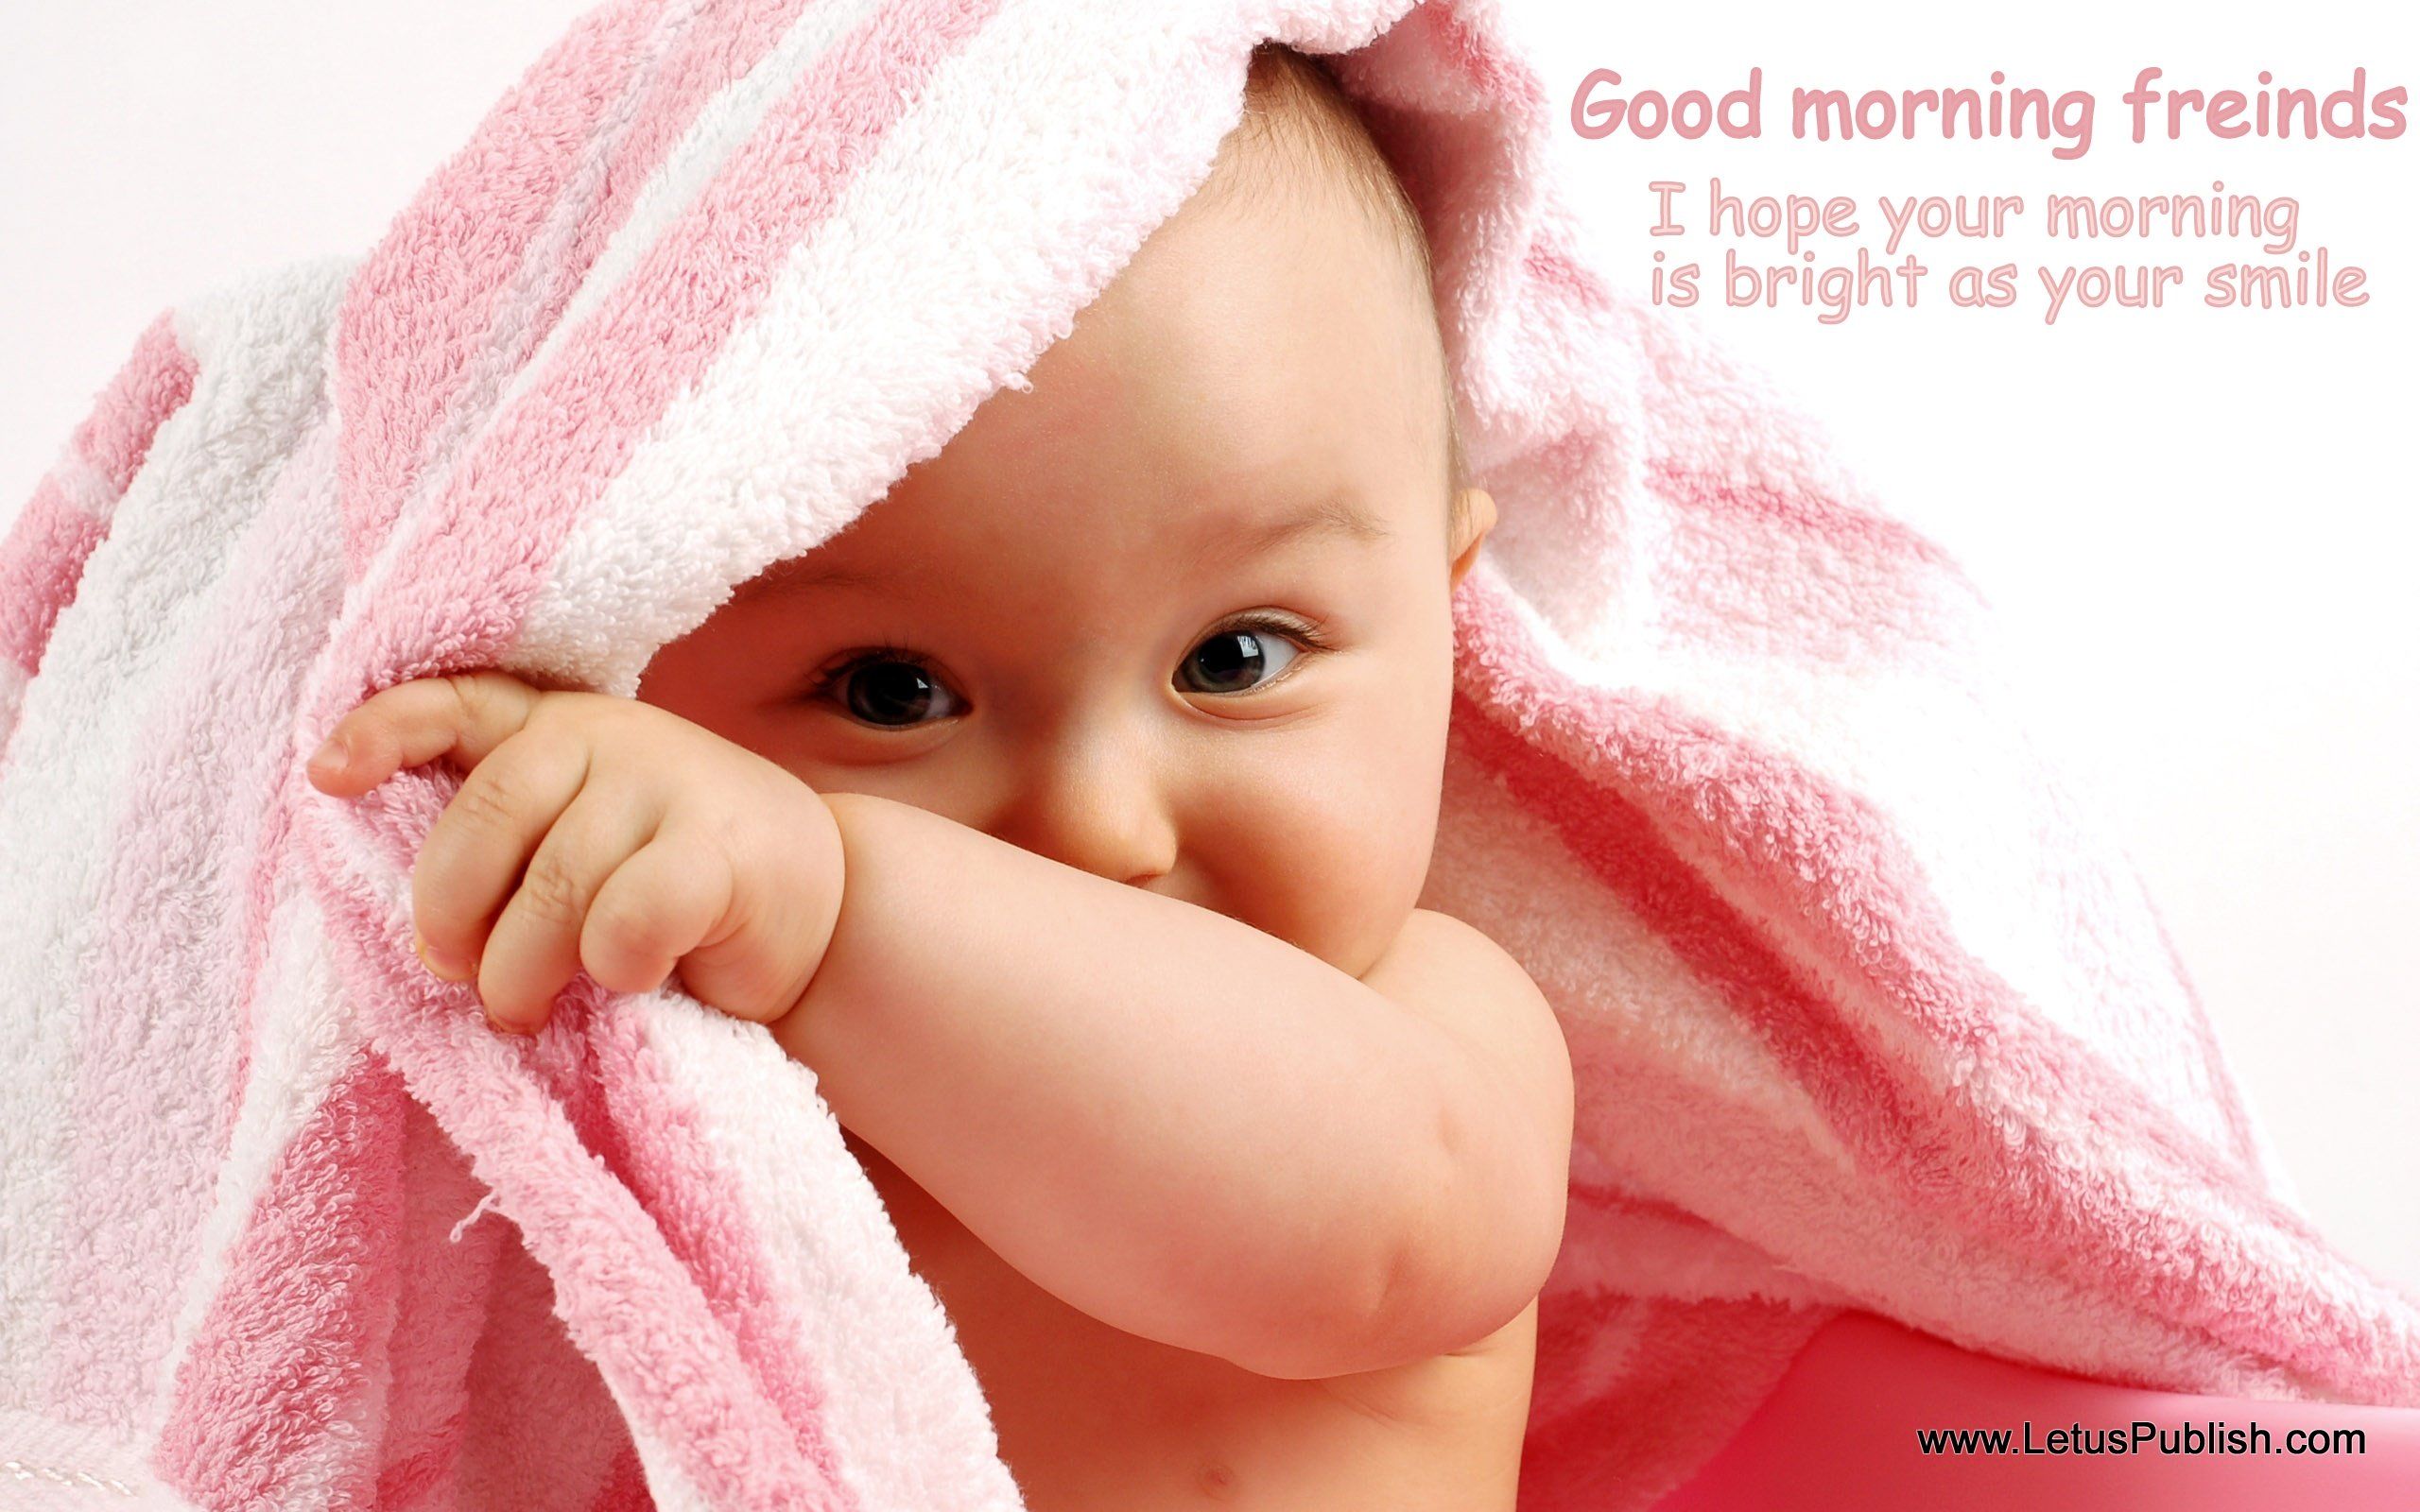 Good Morning Wallpaper Free Download. Cute baby wallpaper, Baby wallpaper hd, Cute baby boy